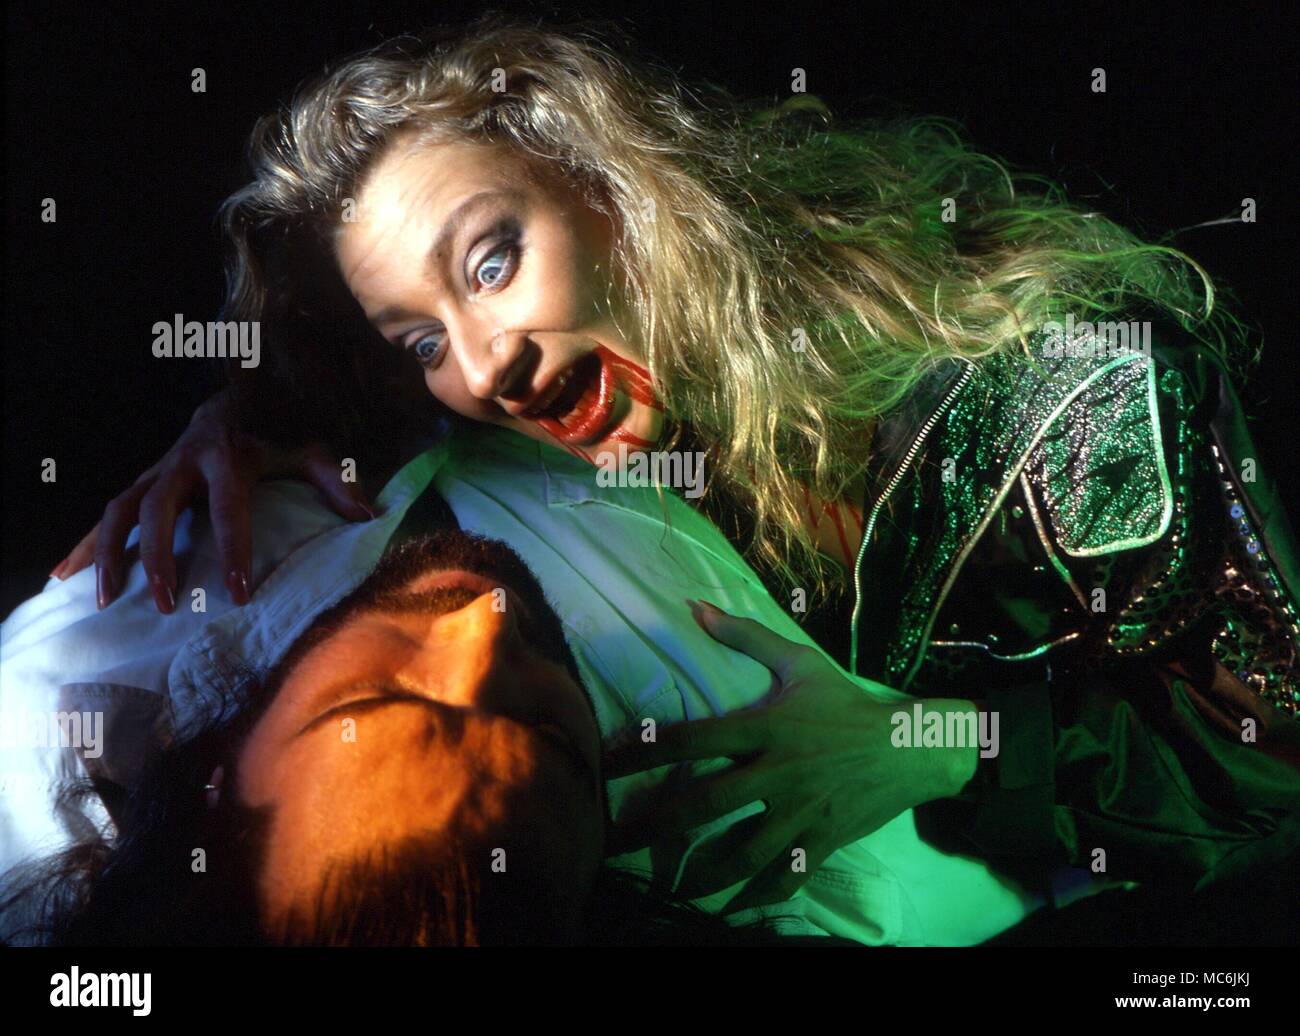 DRACULA - Hembra Drácula, o vampiro con sangre en su boca, atacando a una víctima masculina Foto de stock